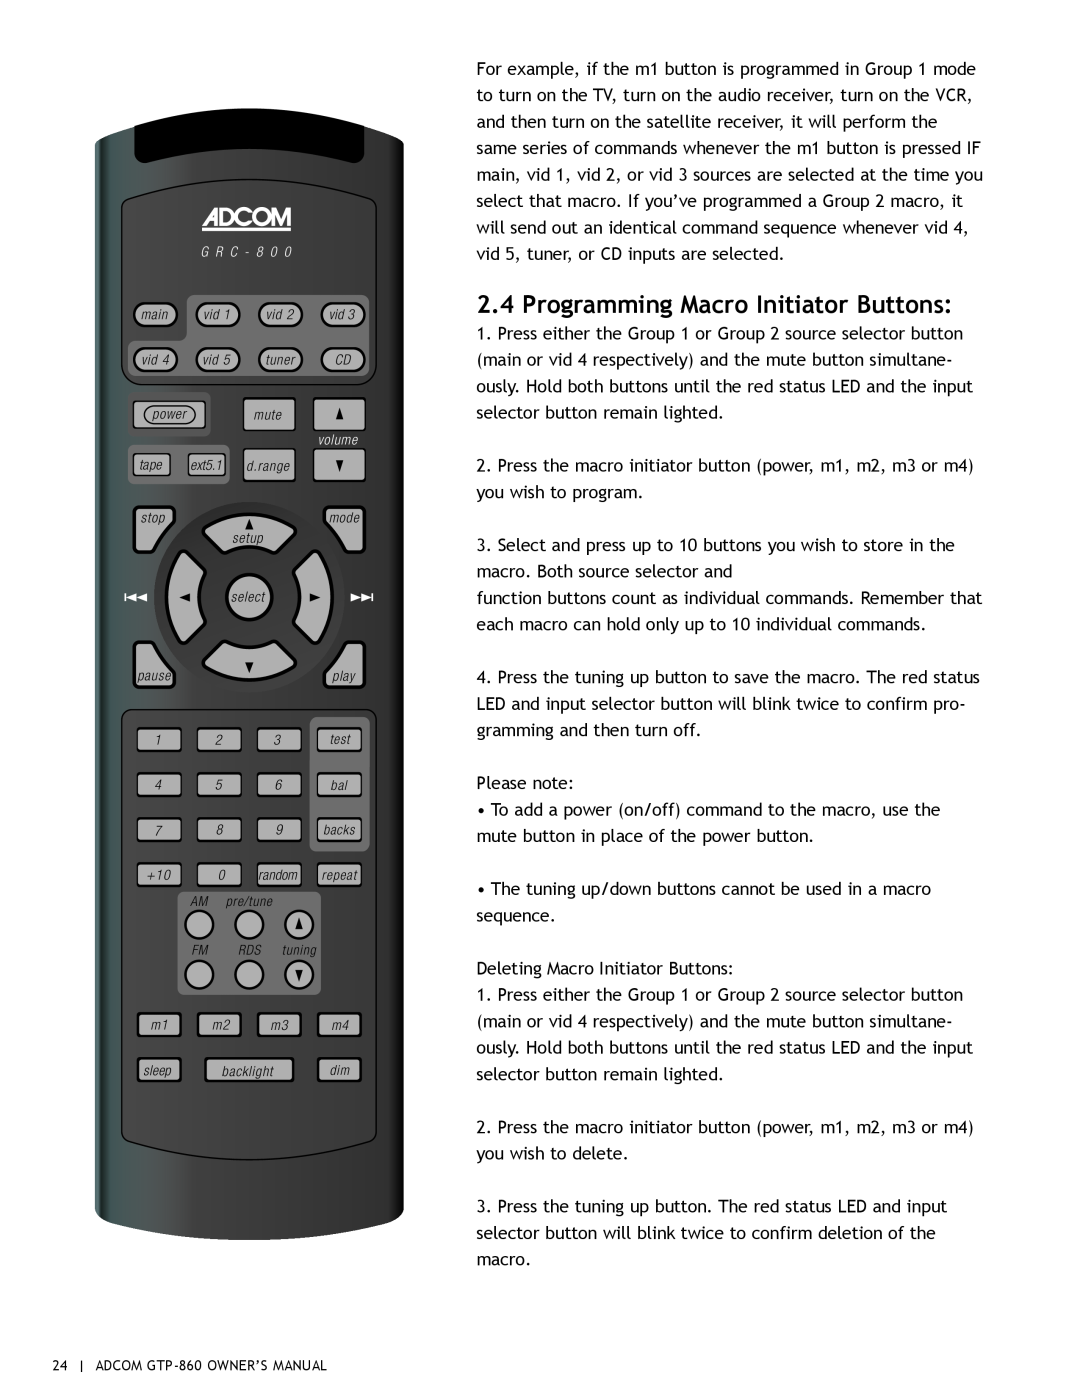 Adcom GTP-860 owner manual Programming Macro Initiator Buttons 